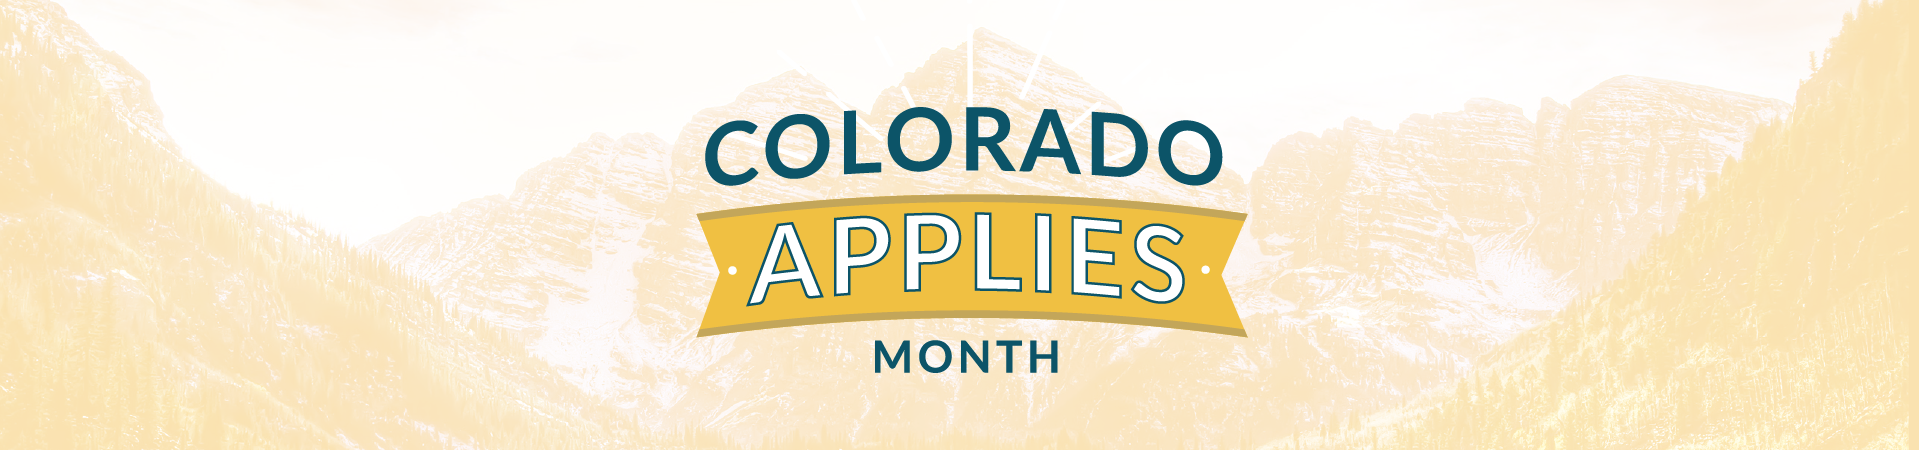 Colorado Applies Month Banner